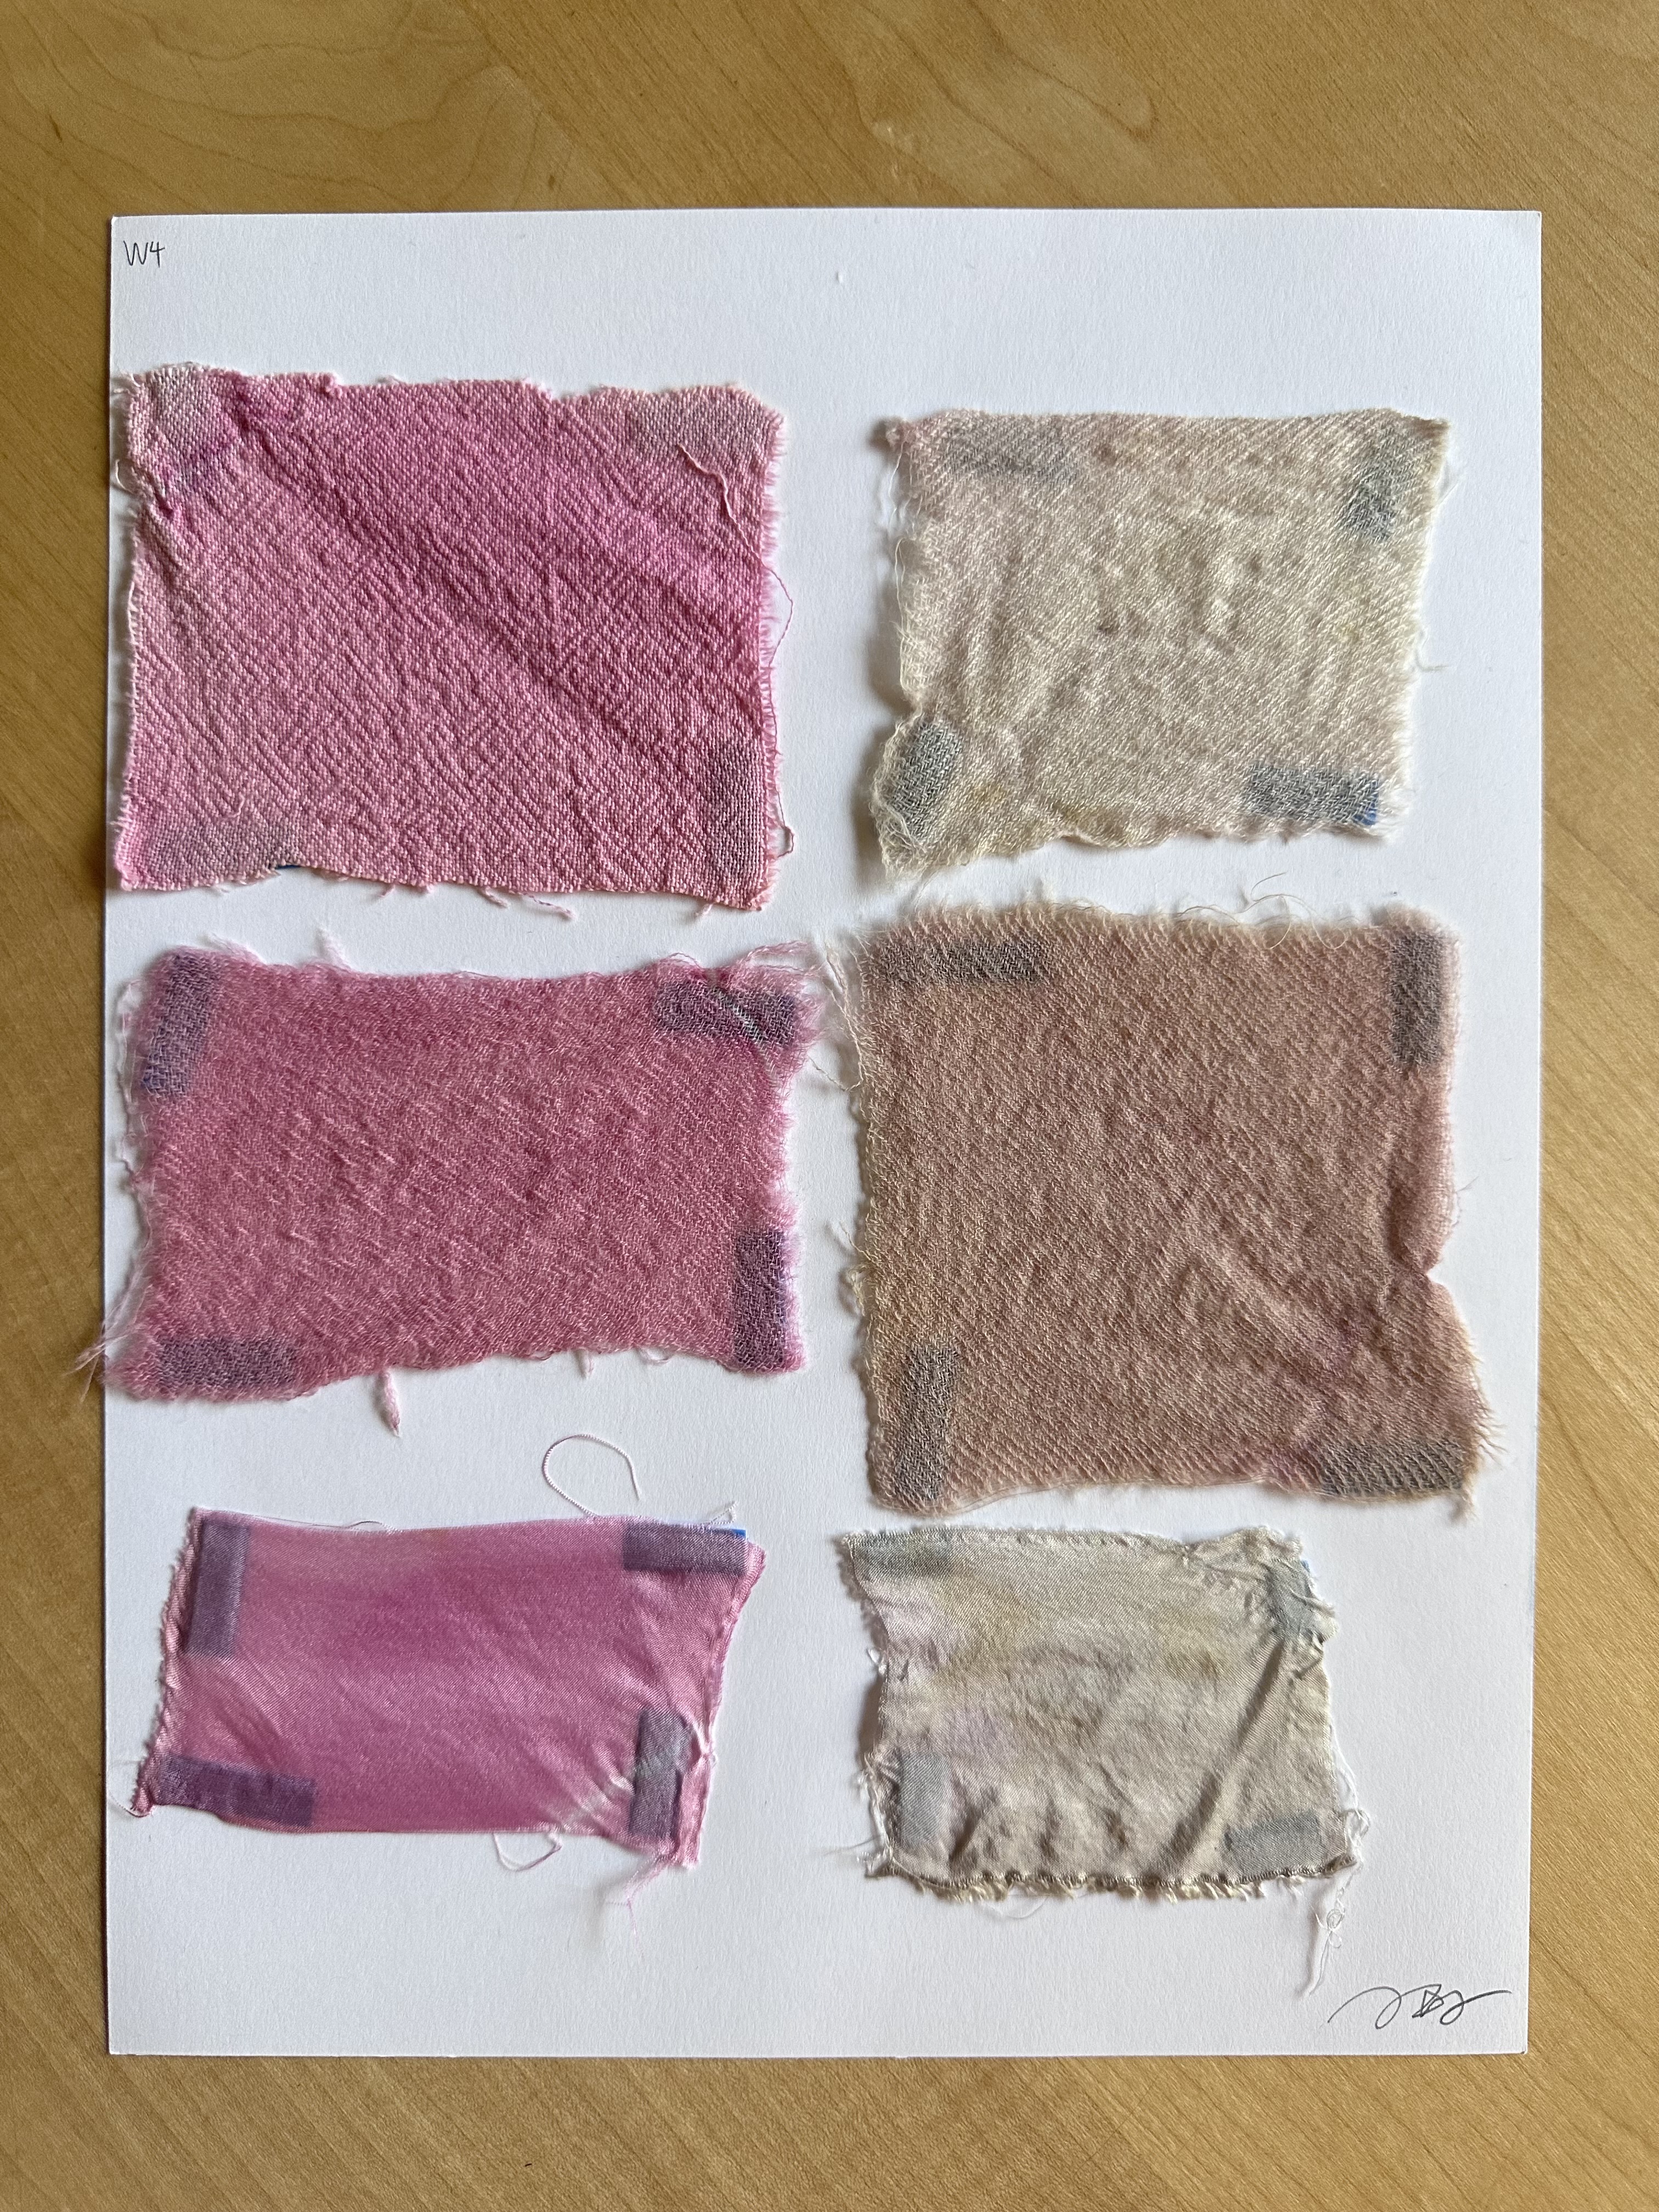 Cochineal Dye Image 3